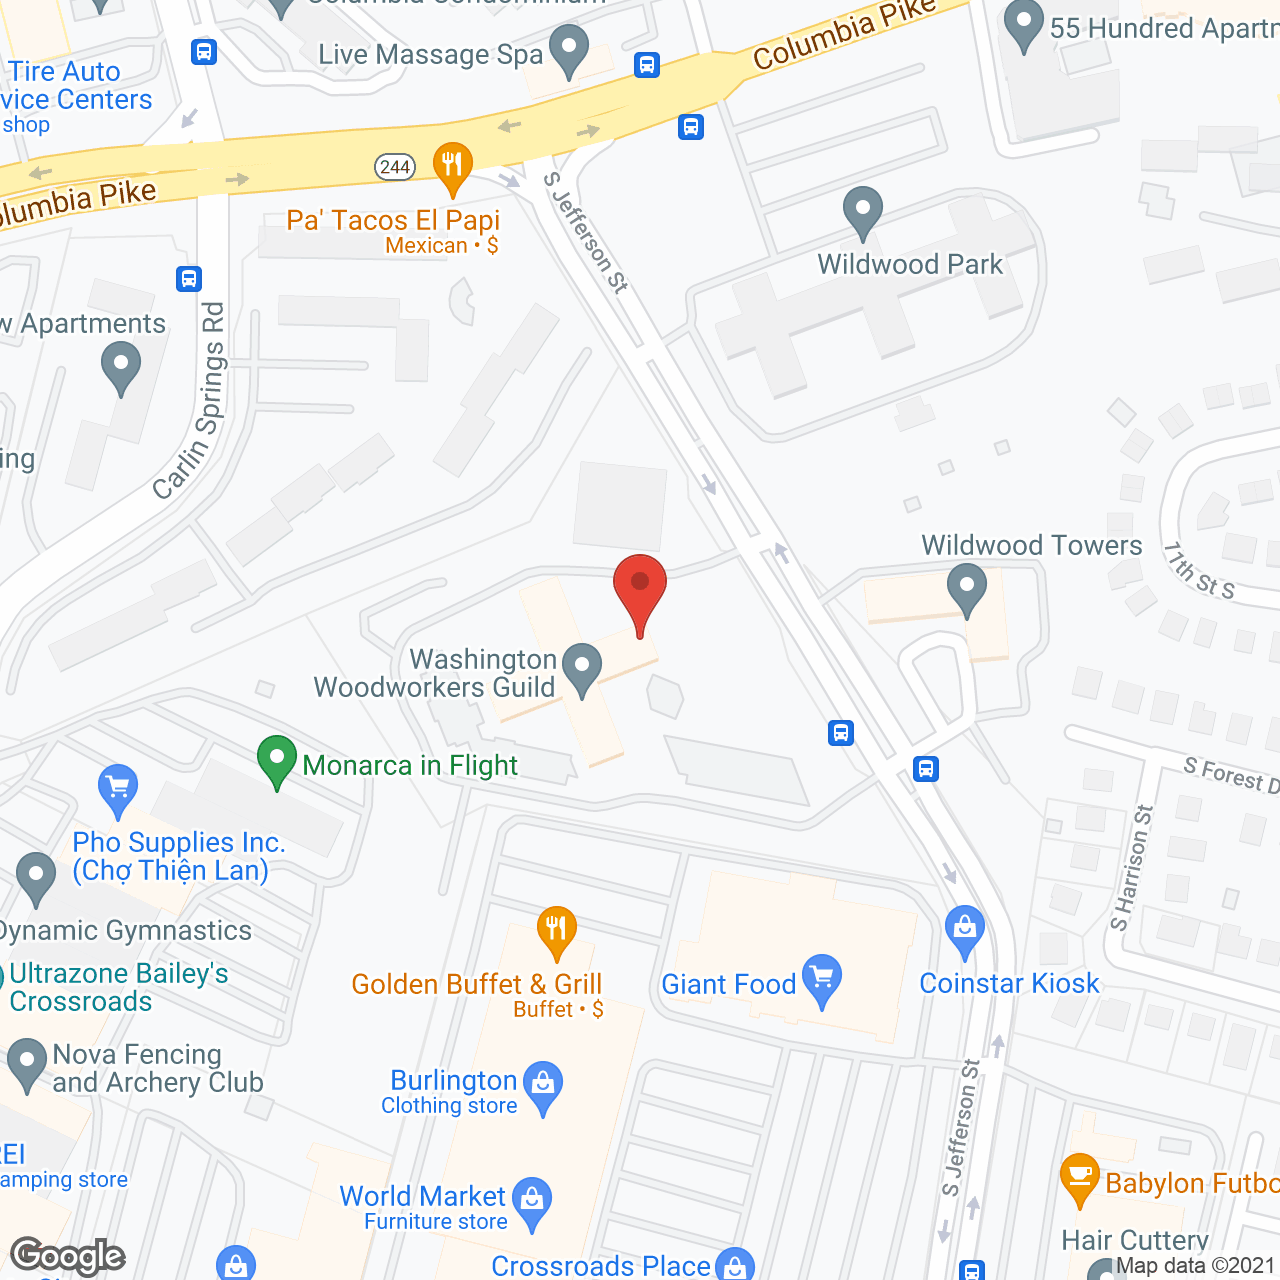 Goodwin House Baileys Crossroads in google map